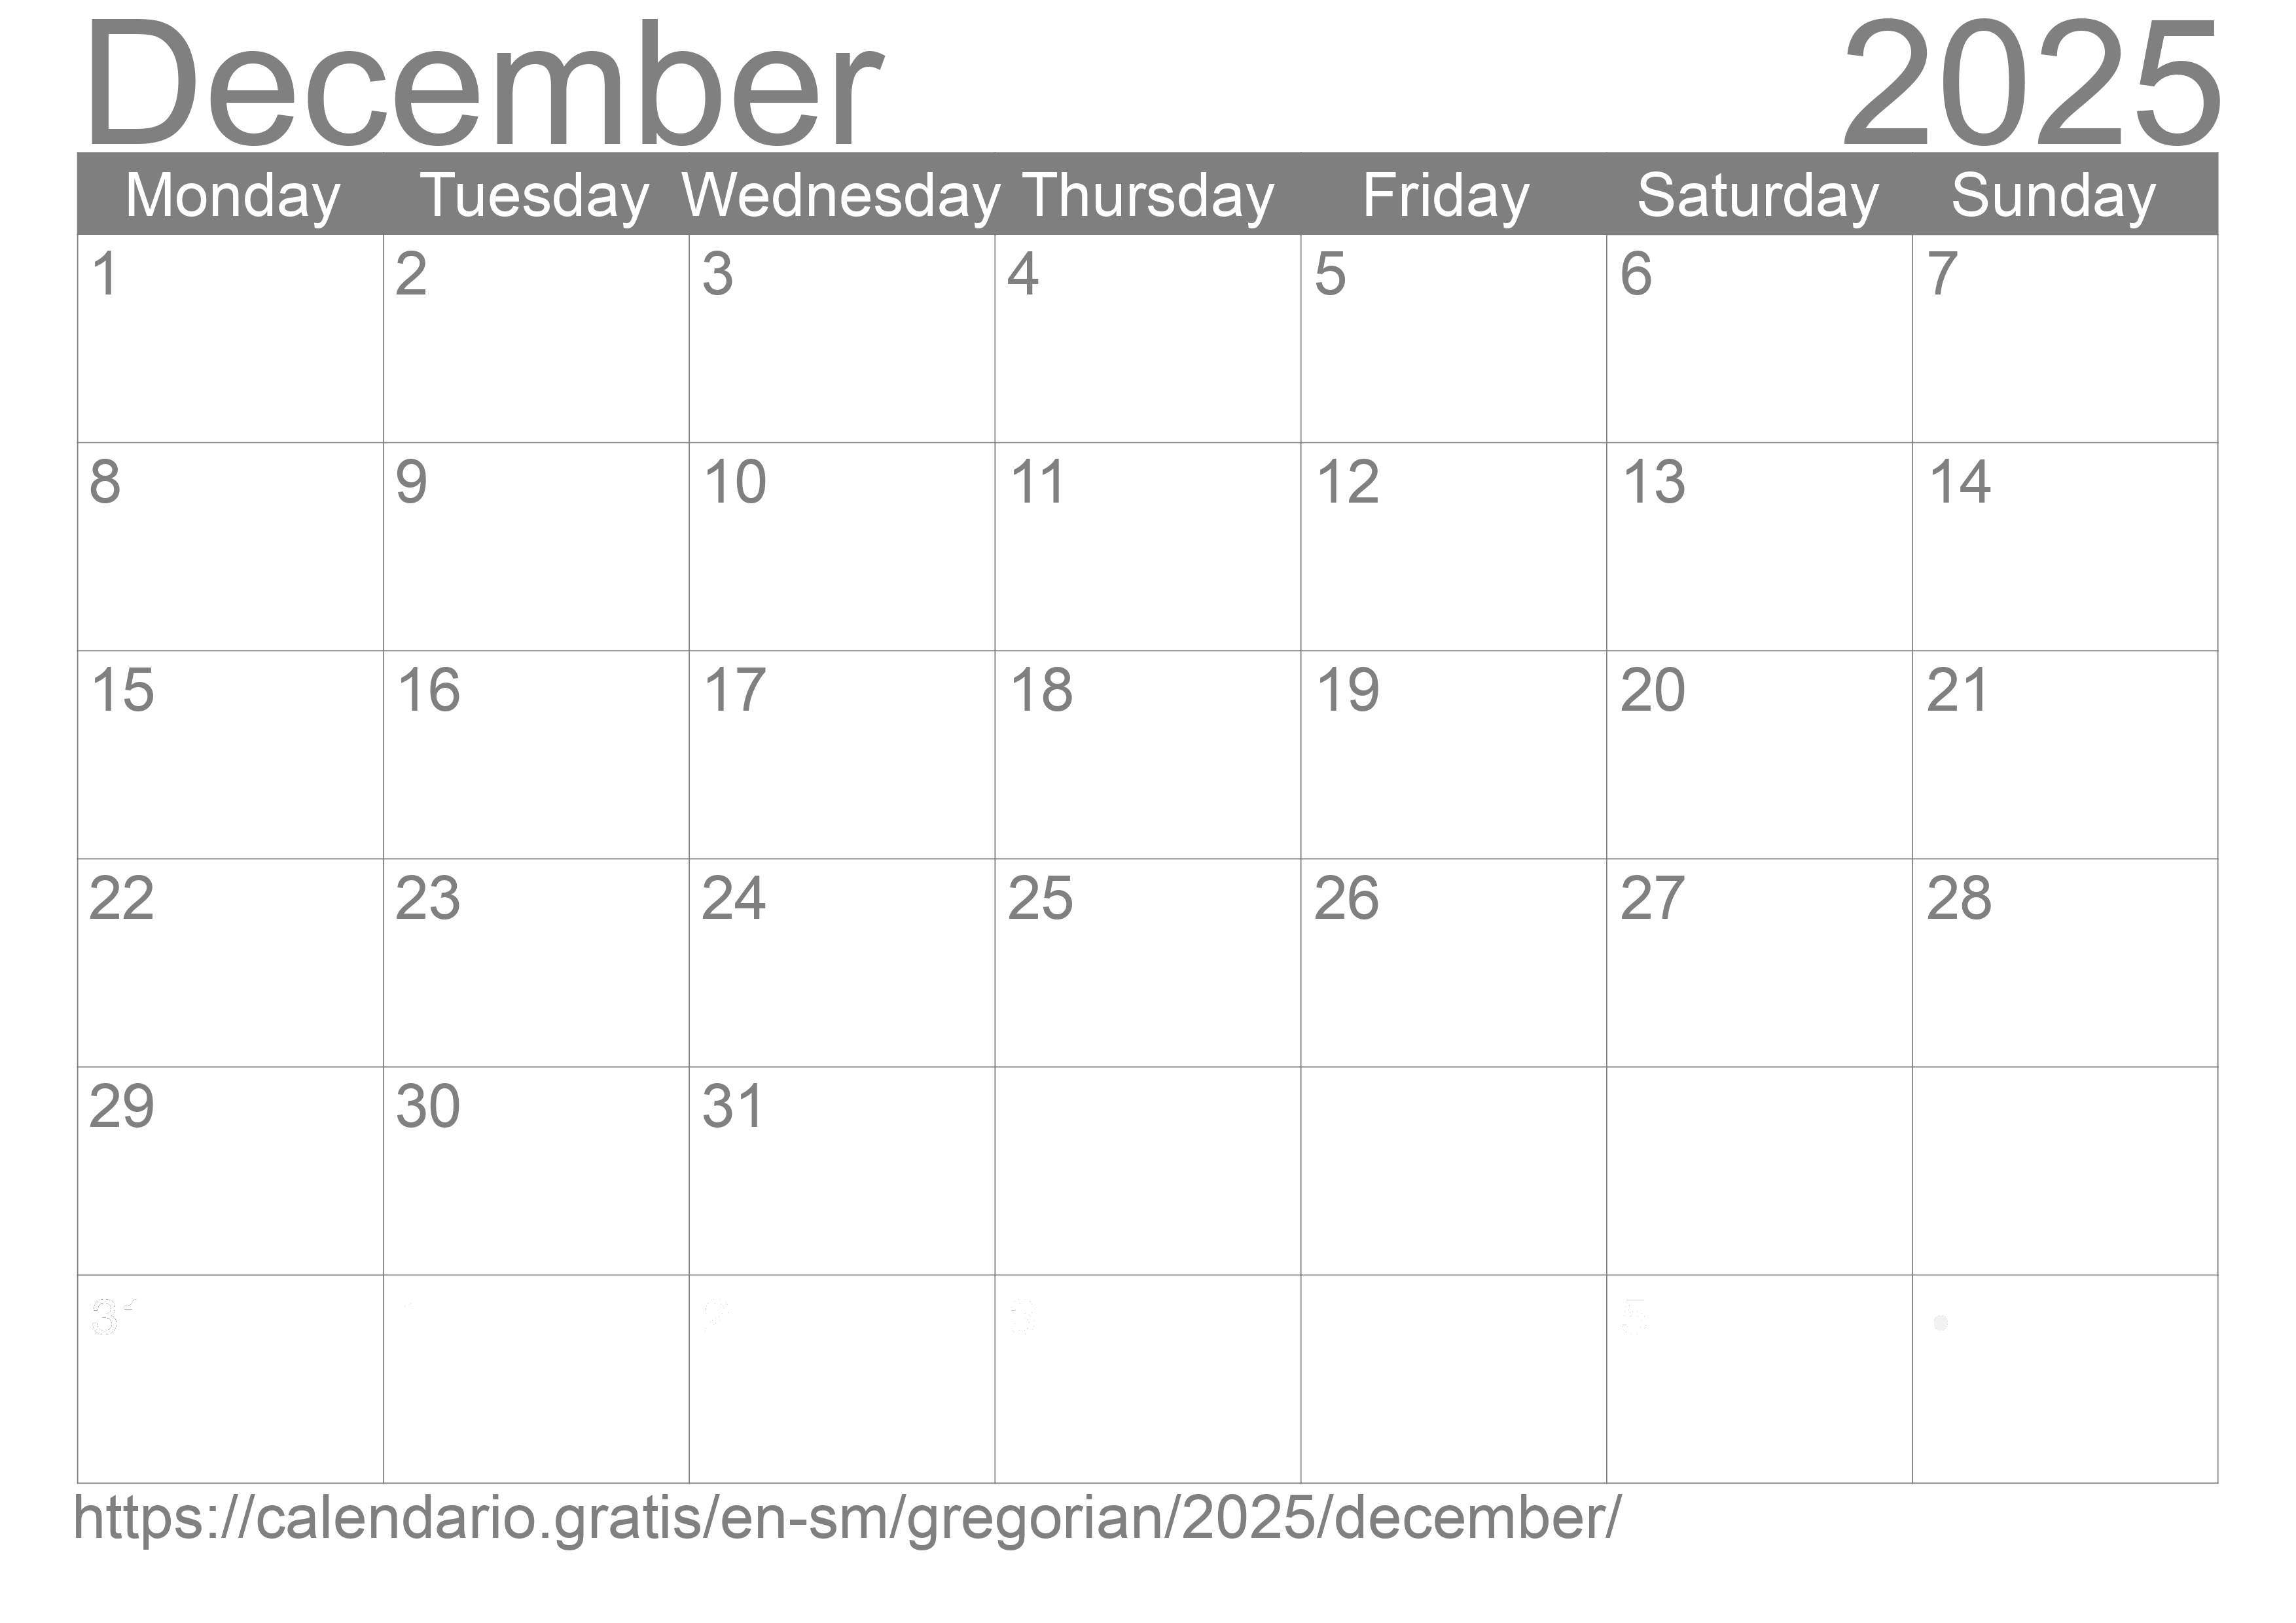 Calendar December 2025 to print